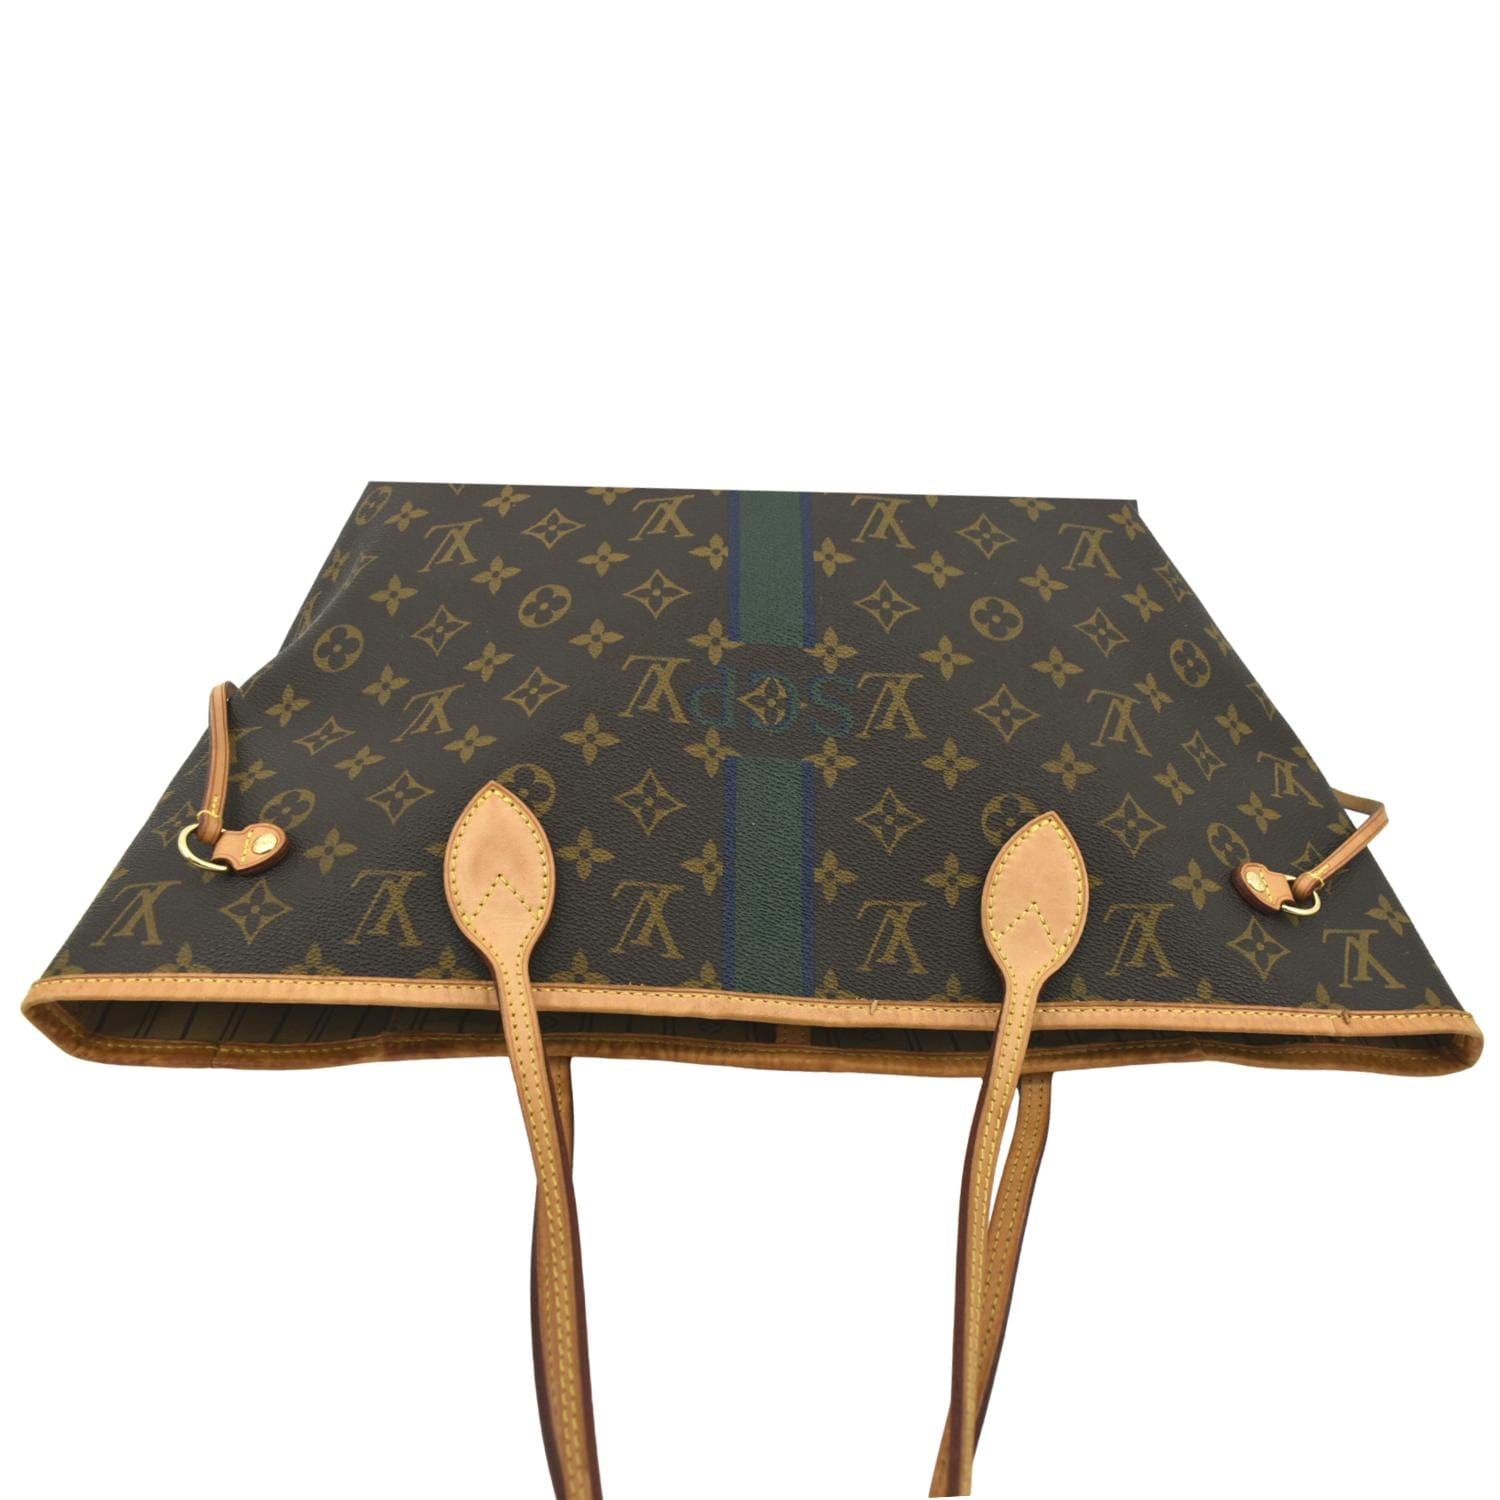 Louis Vuitton Neverfull mm My LV Heritage Customizable Monogram